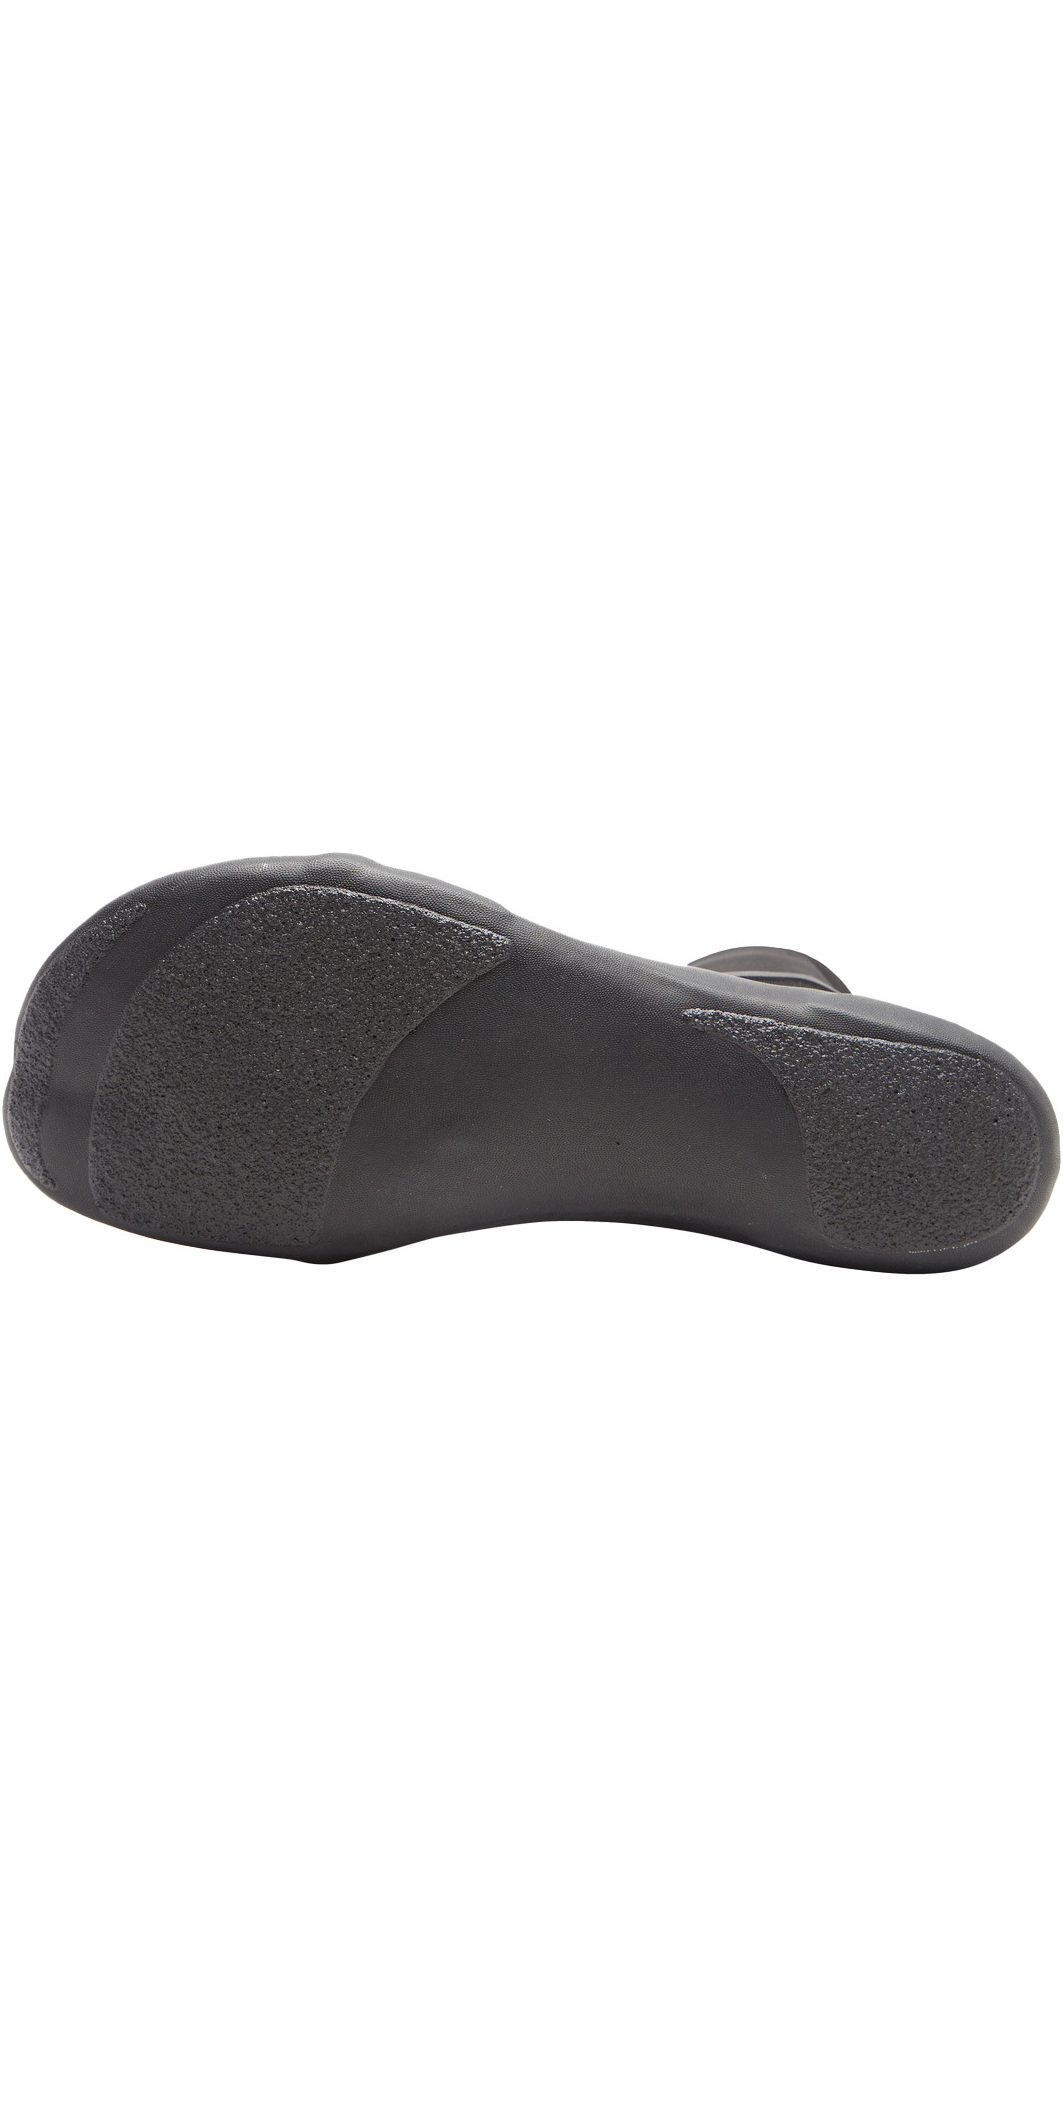 Billabong Absolute 5mm Split Toe Wetsuit Boots - Black Hash | eBay